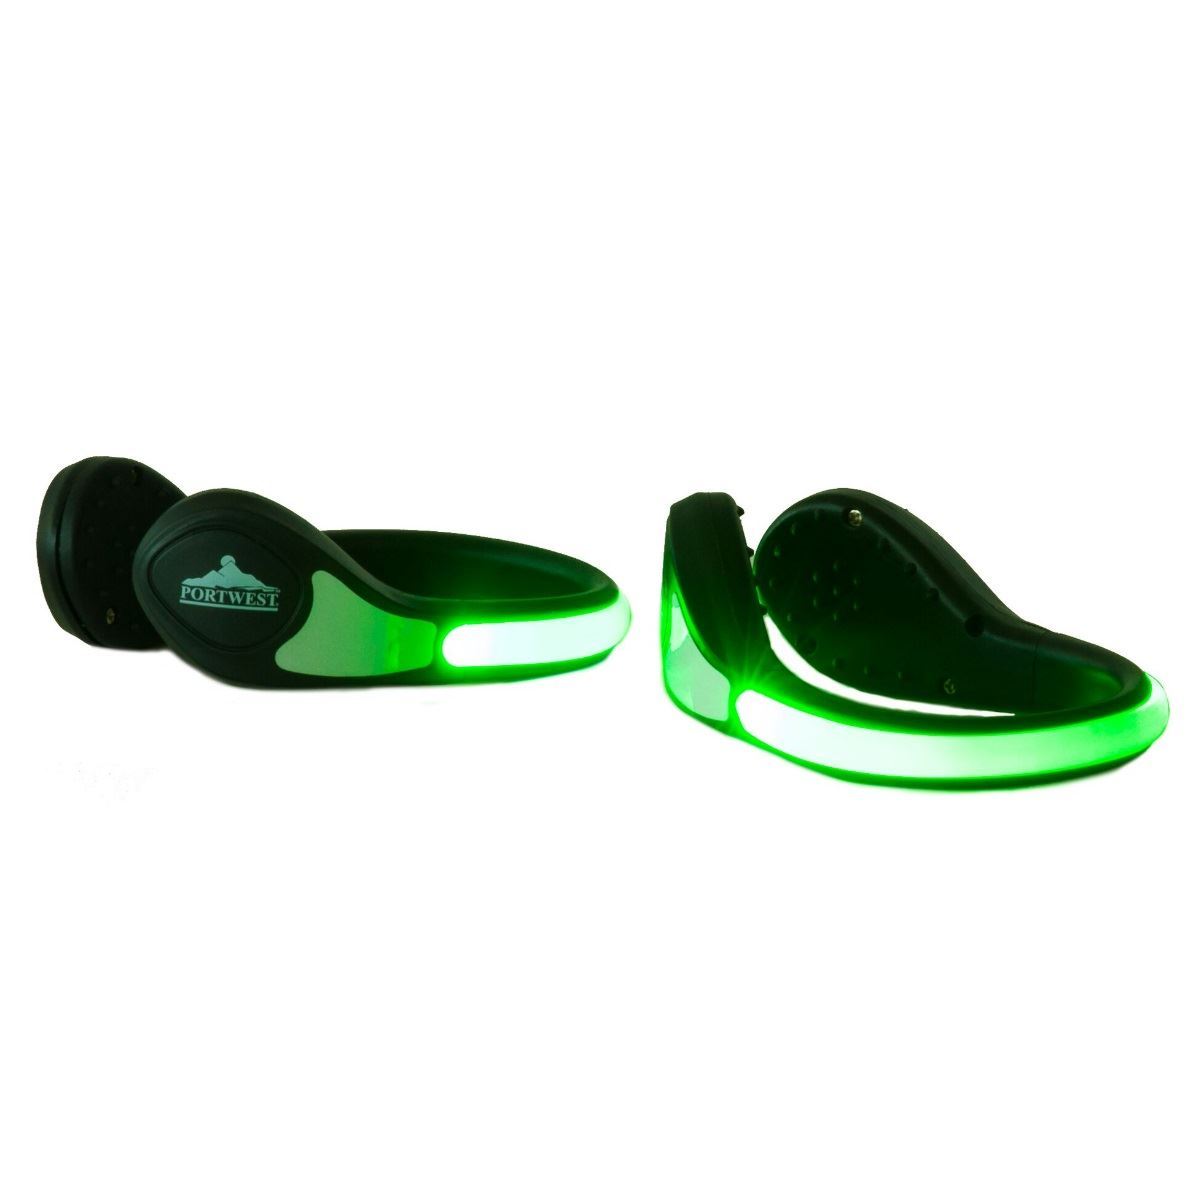 Illuminated LED Shoe Clip Green